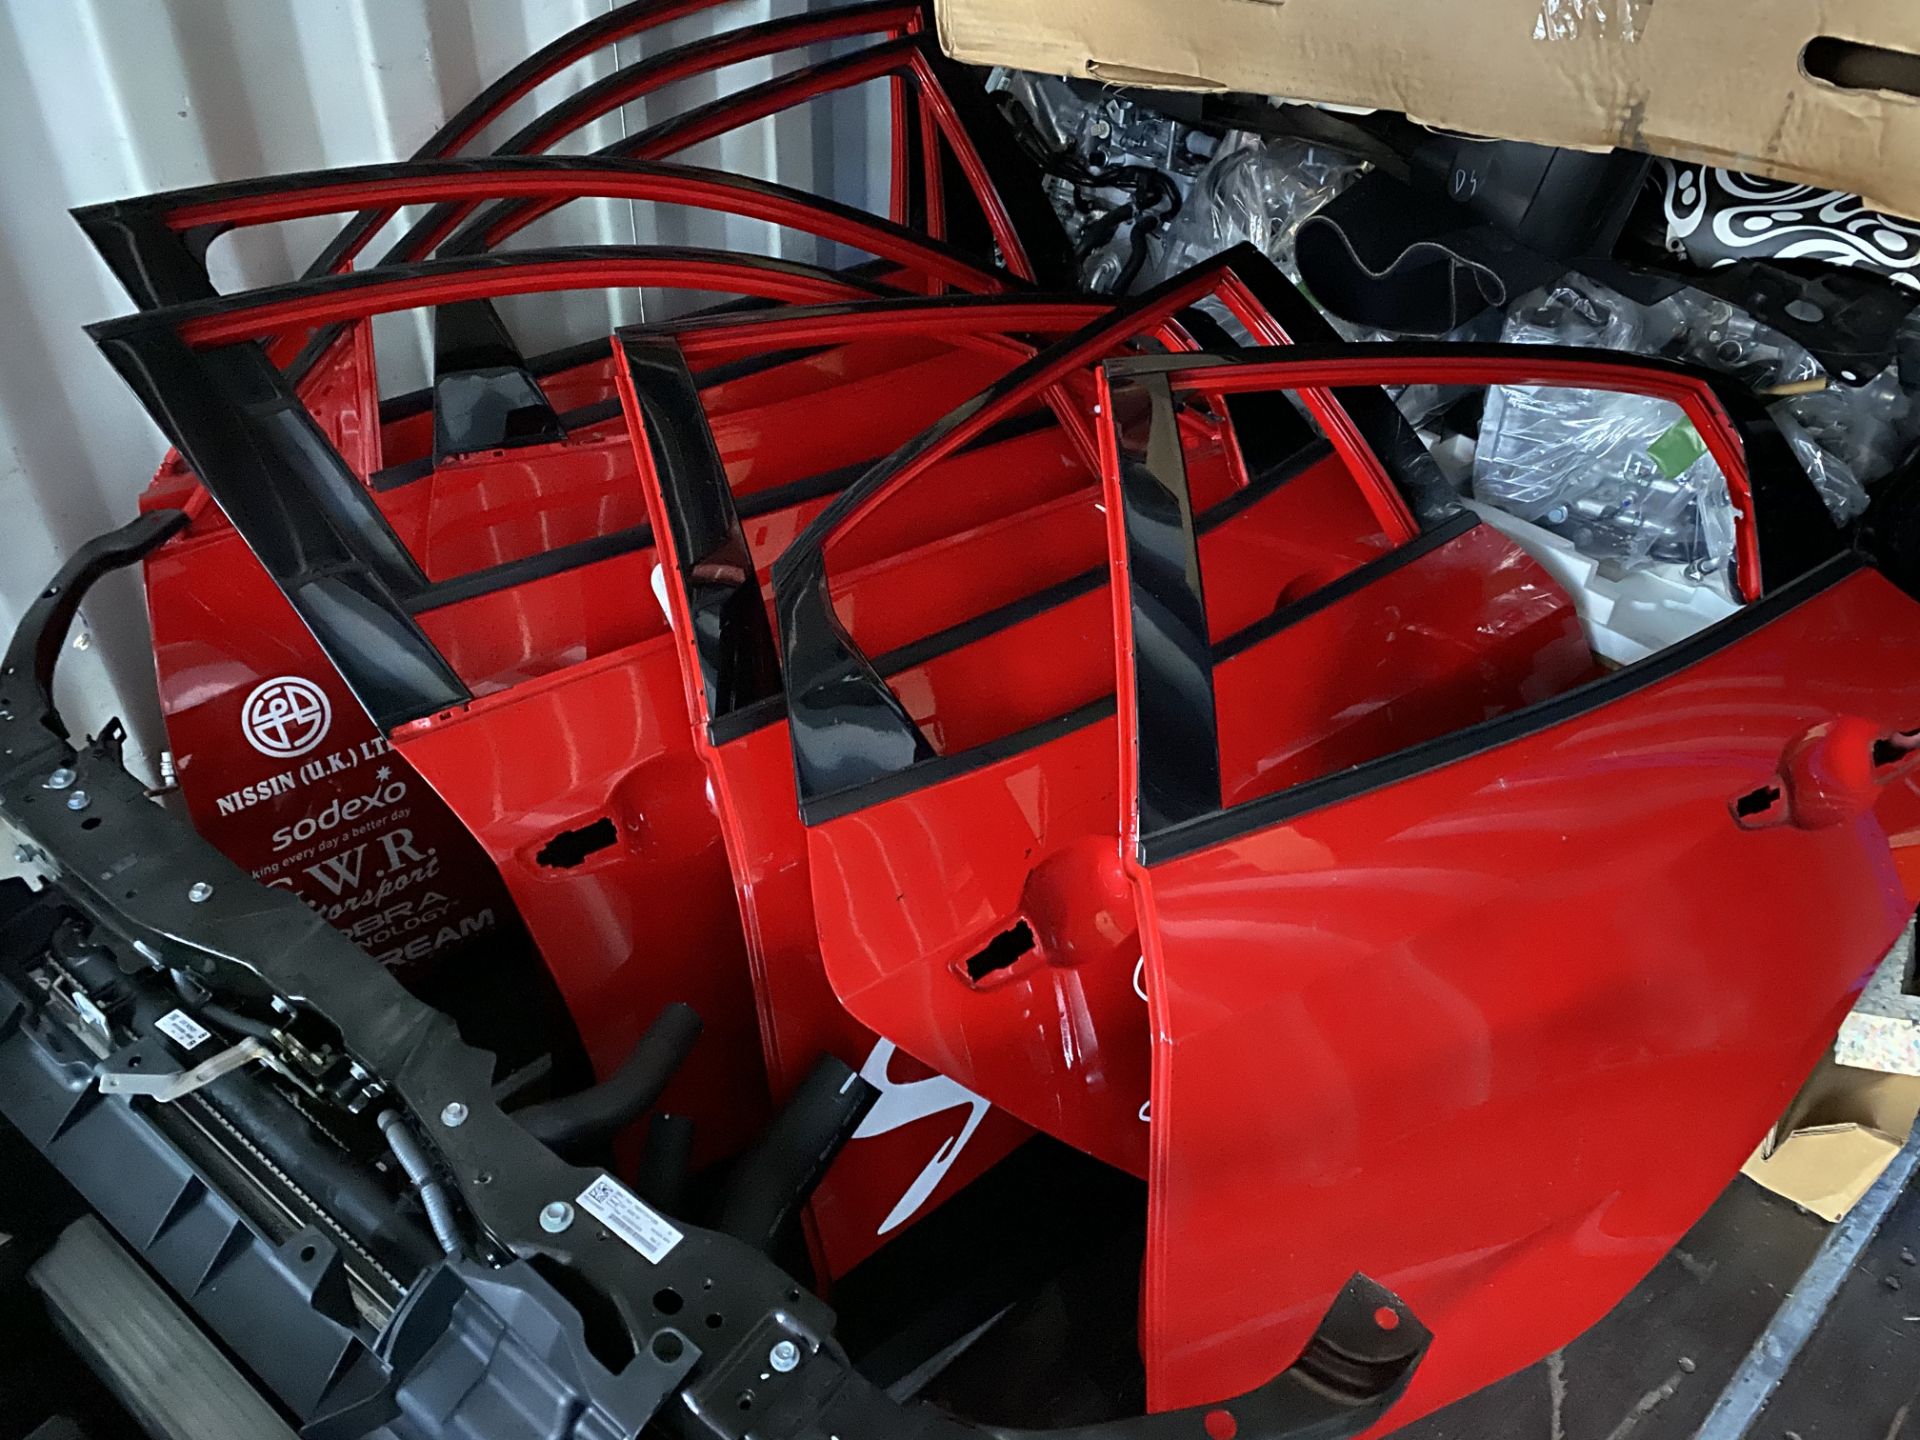 Honda Civic Endurance 20L FK8 type R left hand drive racing car, red and black paint finish, 2018 - Bild 75 aus 93